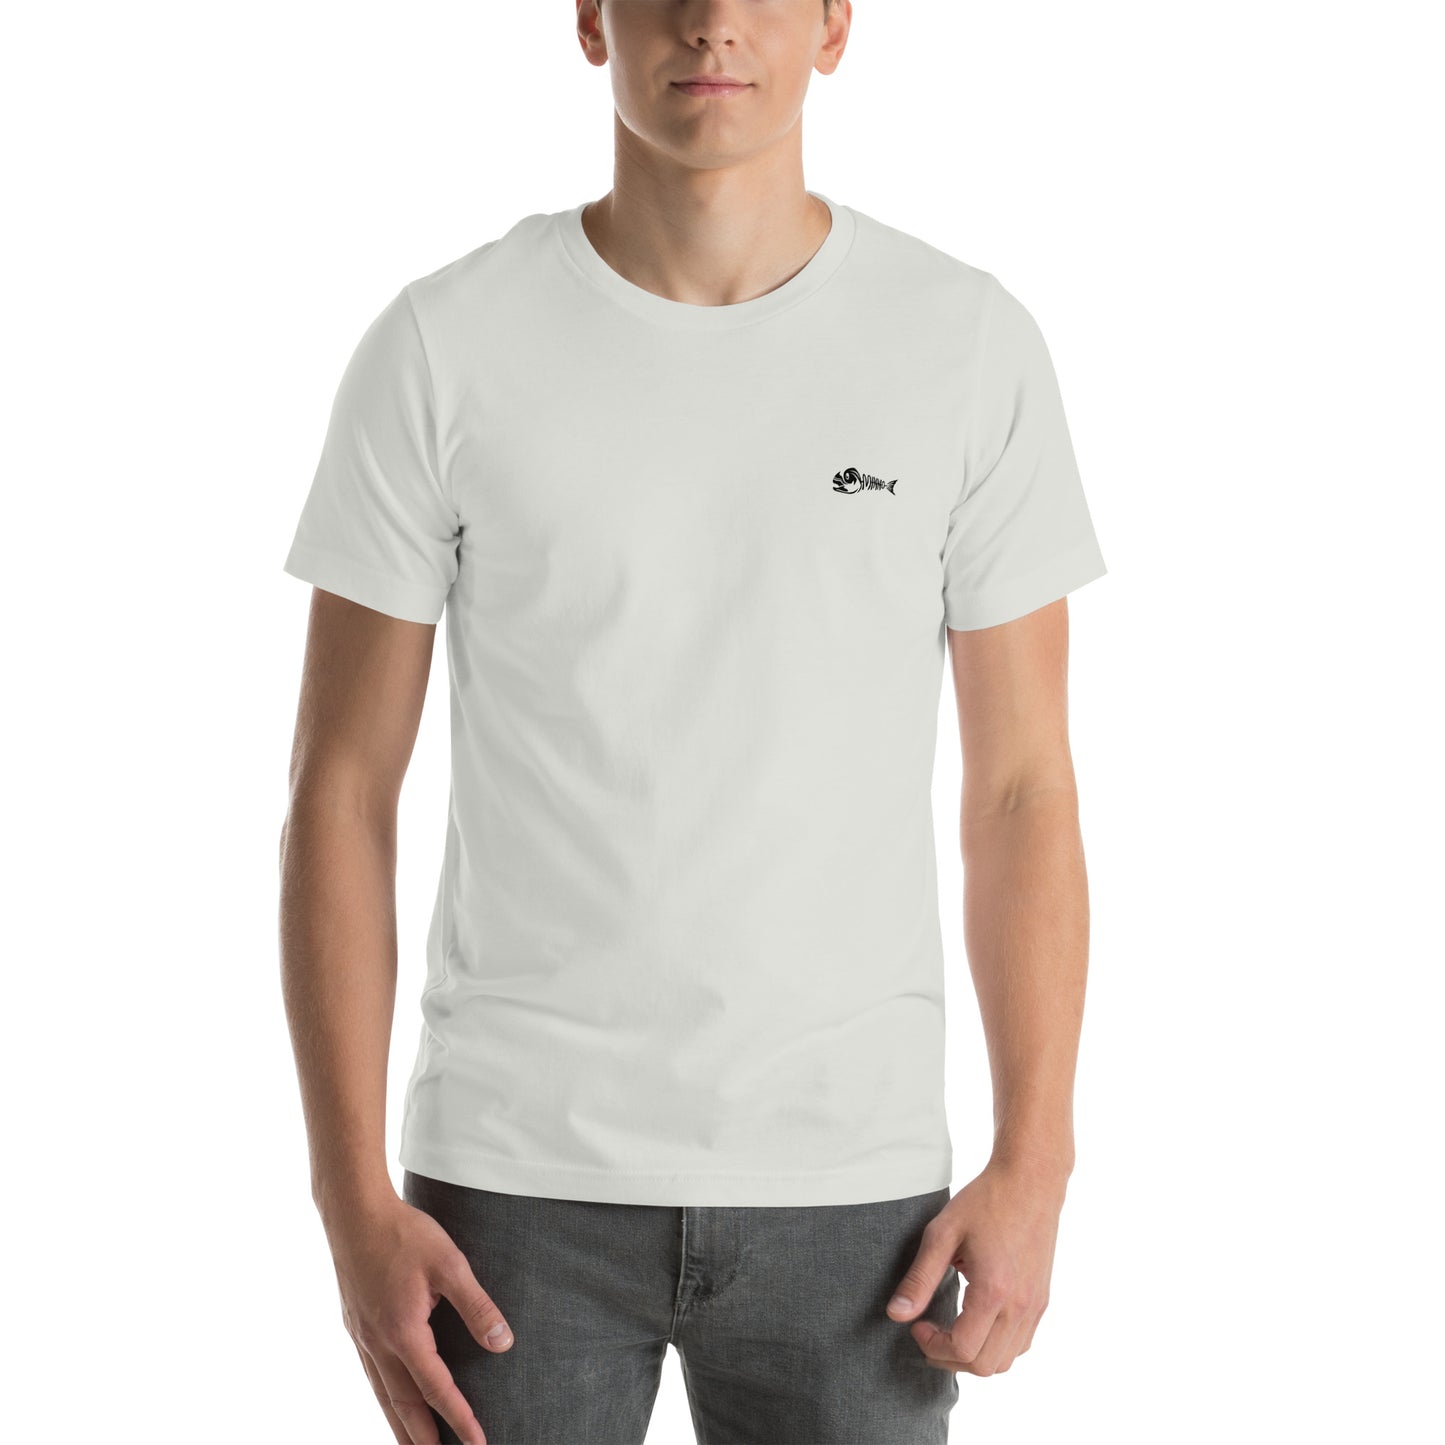 Minno Unisex T-shirt - Horse 1 (Full Colour)